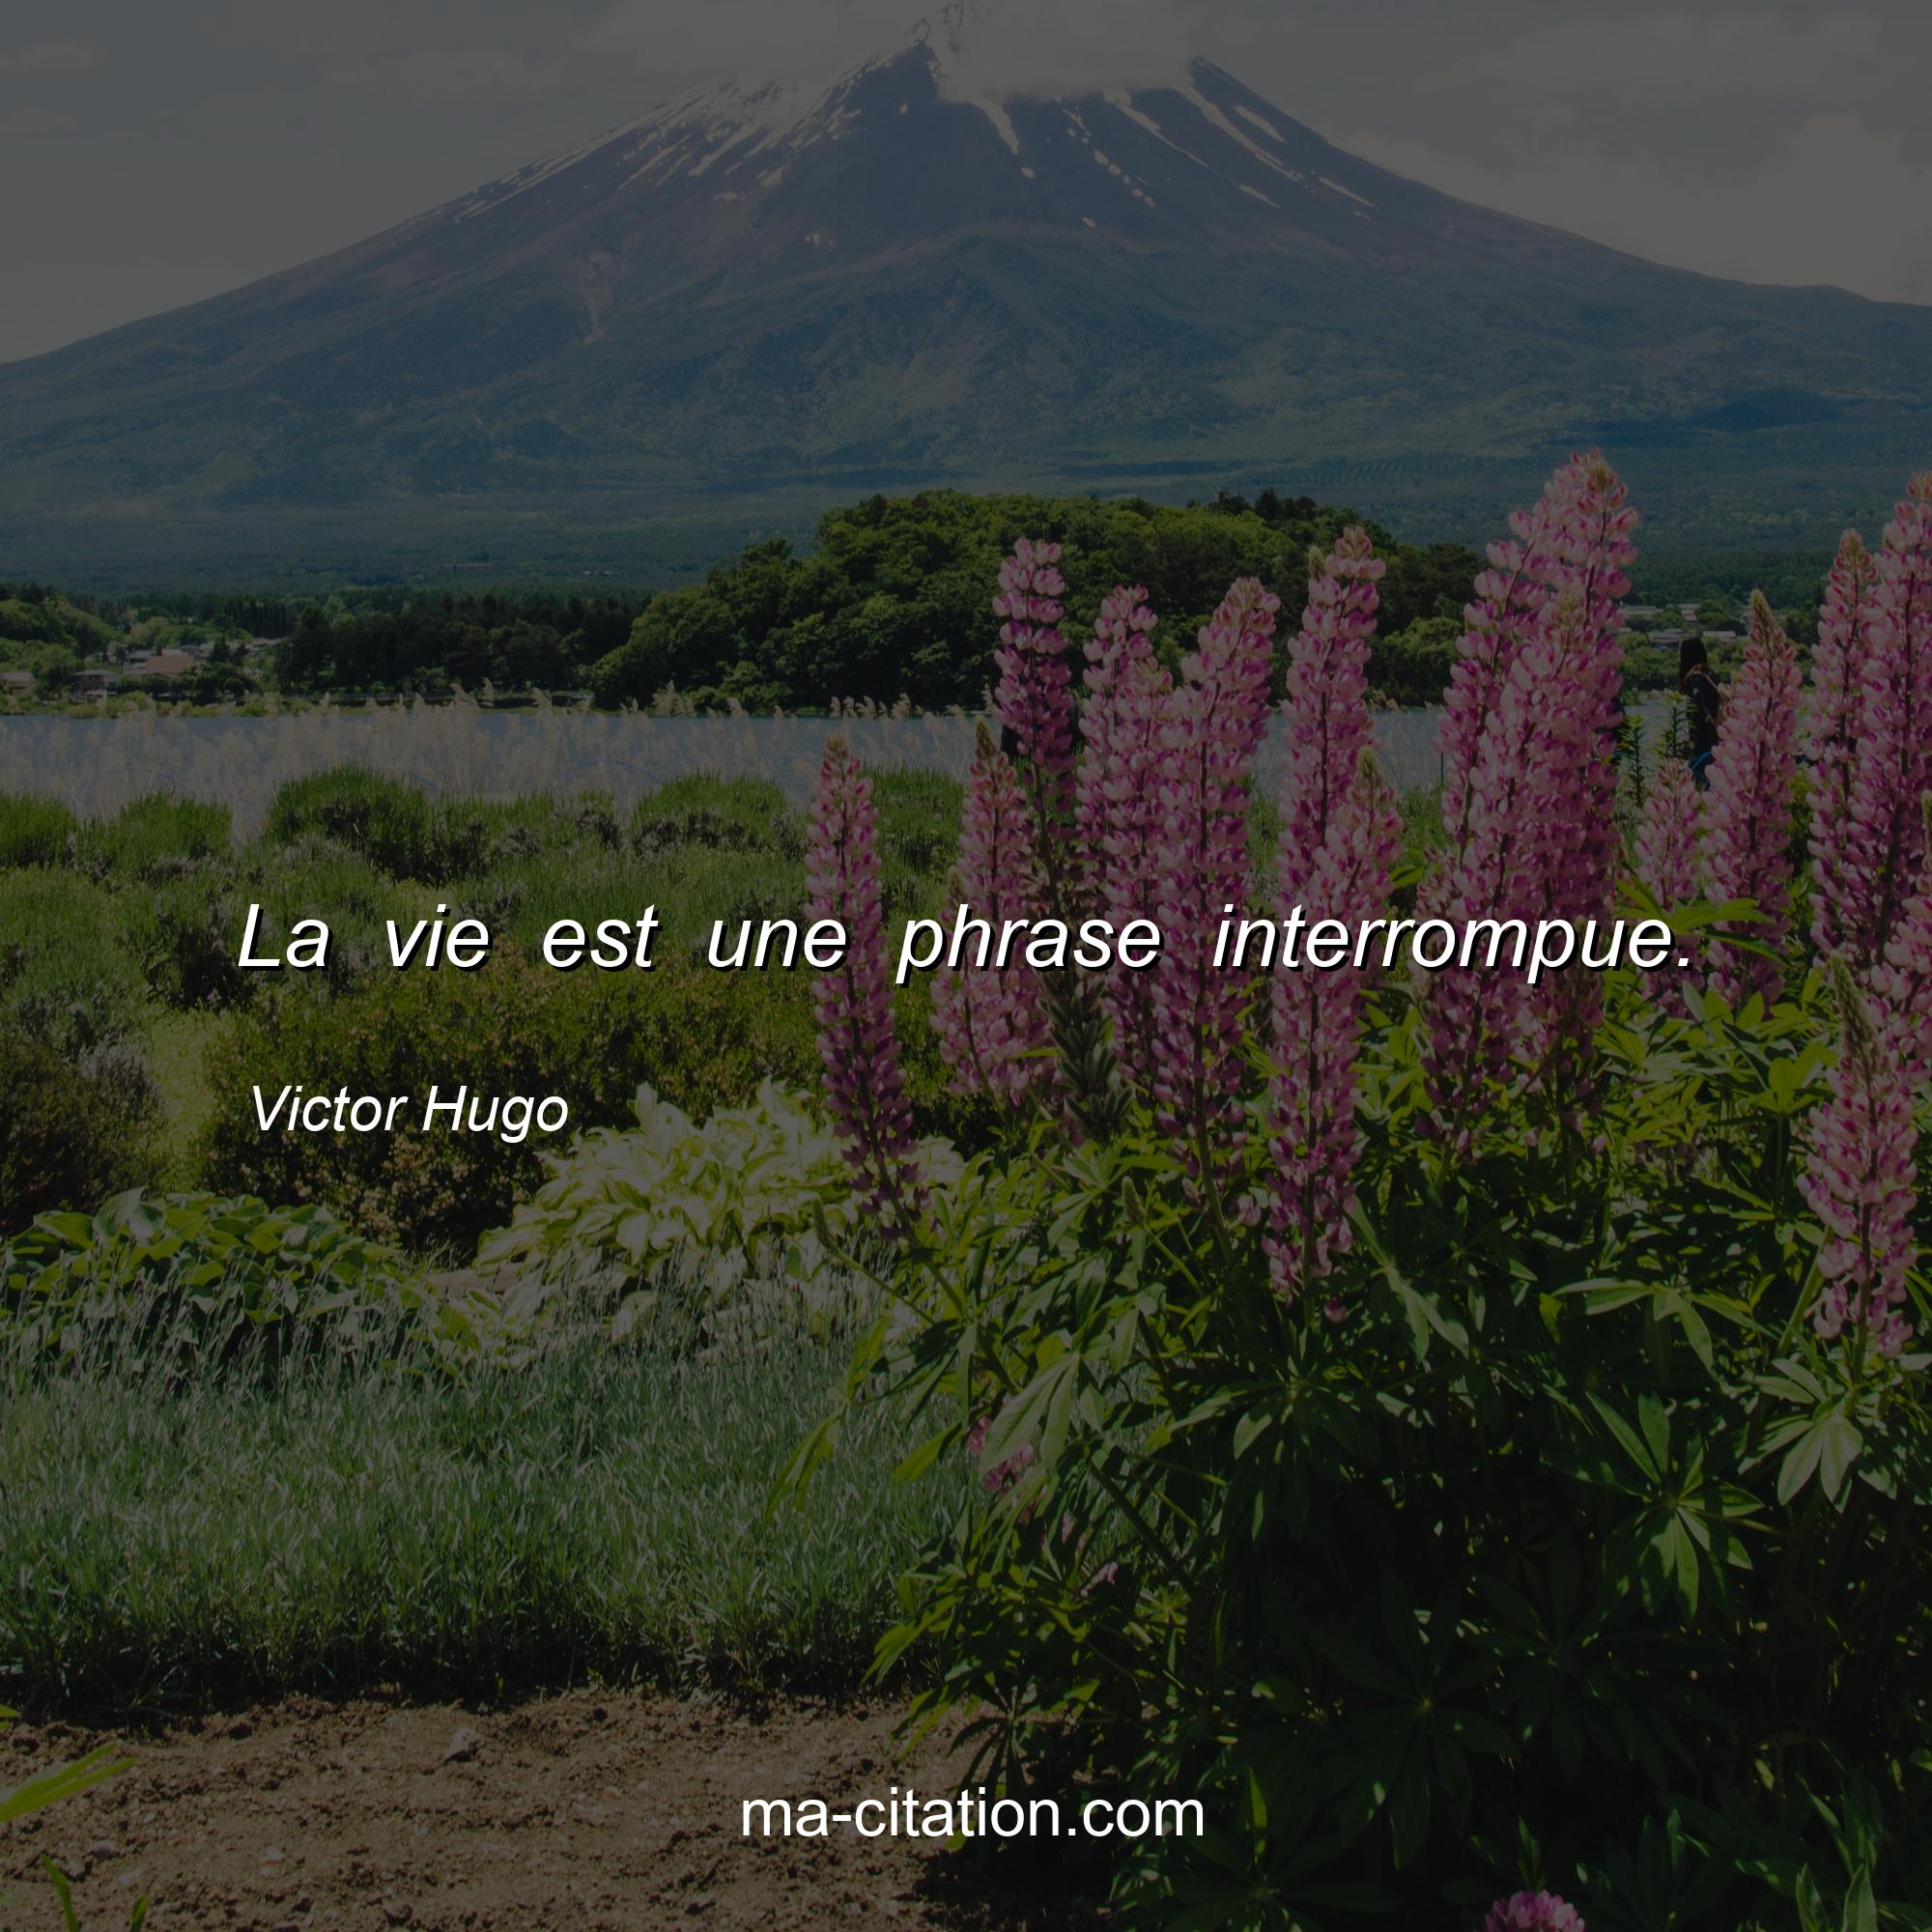 Victor Hugo : La vie est une phrase interrompue.